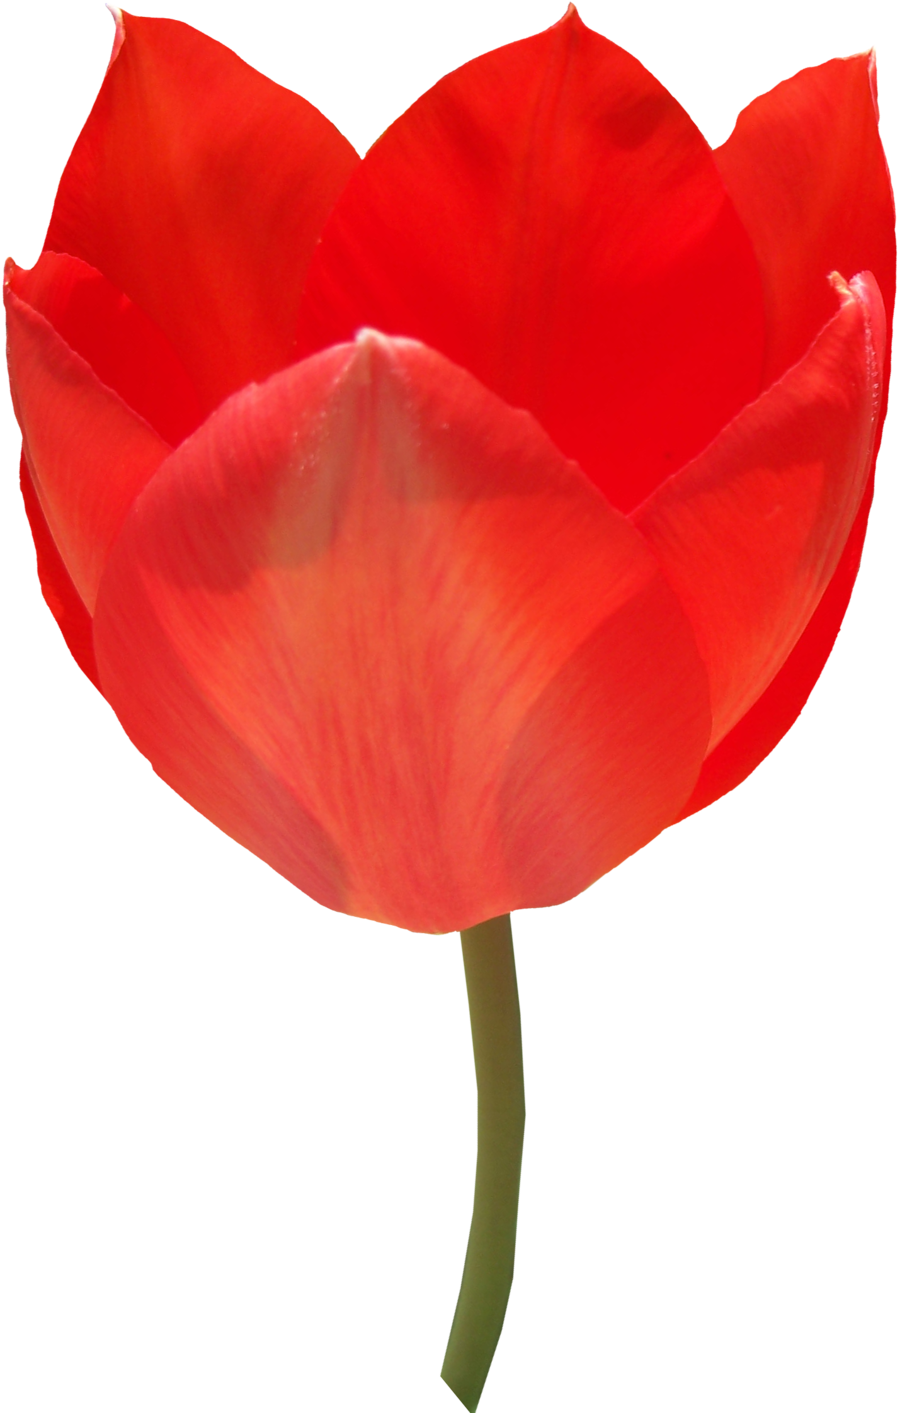 Vibrant Red Tulip Single Bloom